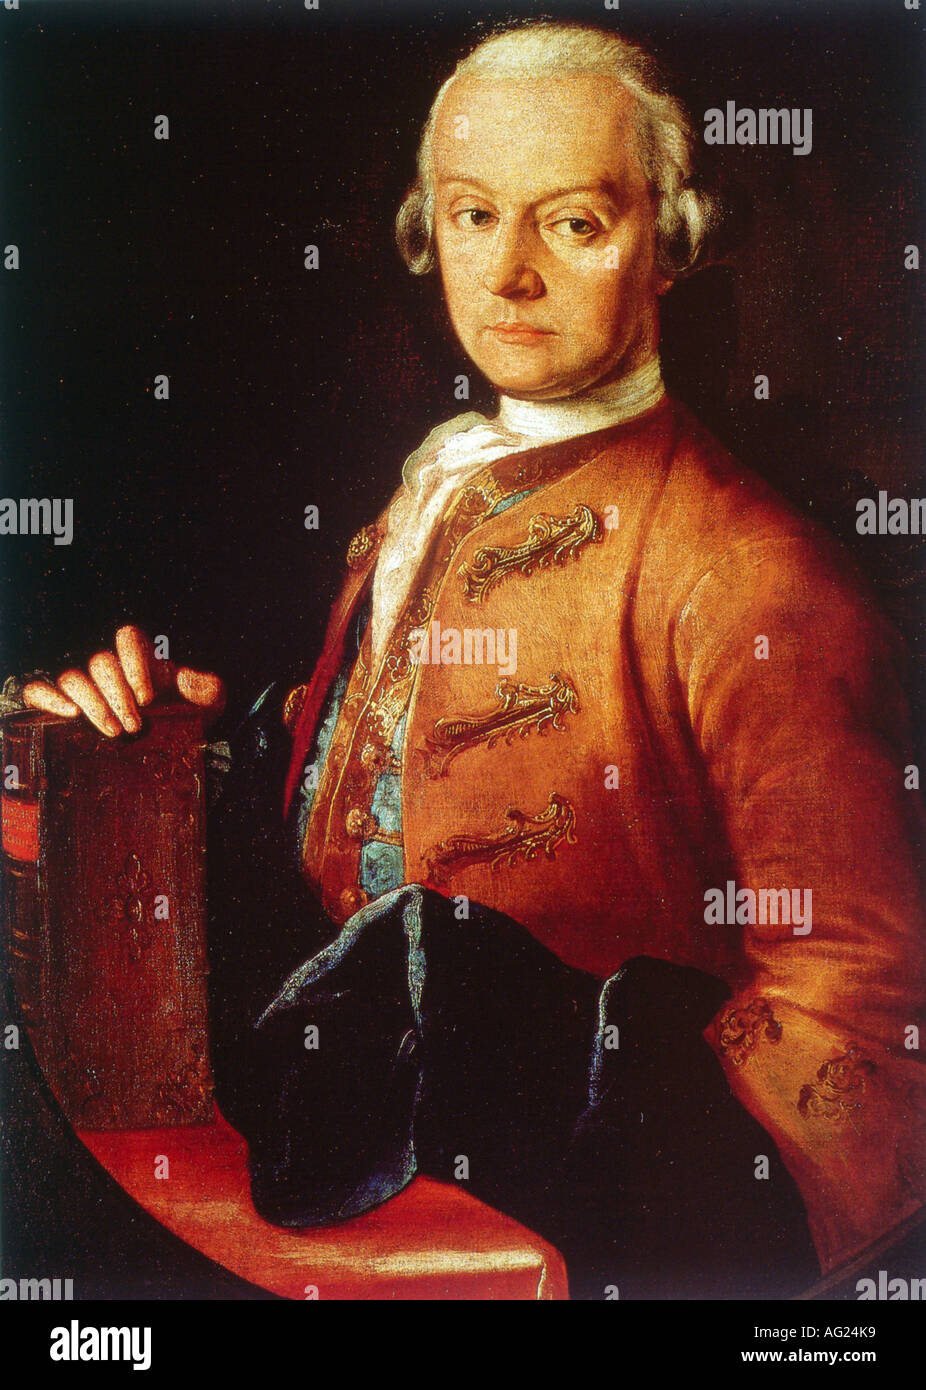 Mozart, Wolfgang Amadeus, 27.1.1756 - 5.12.1791, Austrian composer, his father Leopold, painting, probably by Pietro Antonio Lorenzoni (1721 - 1782), 18th century, Stock Photo